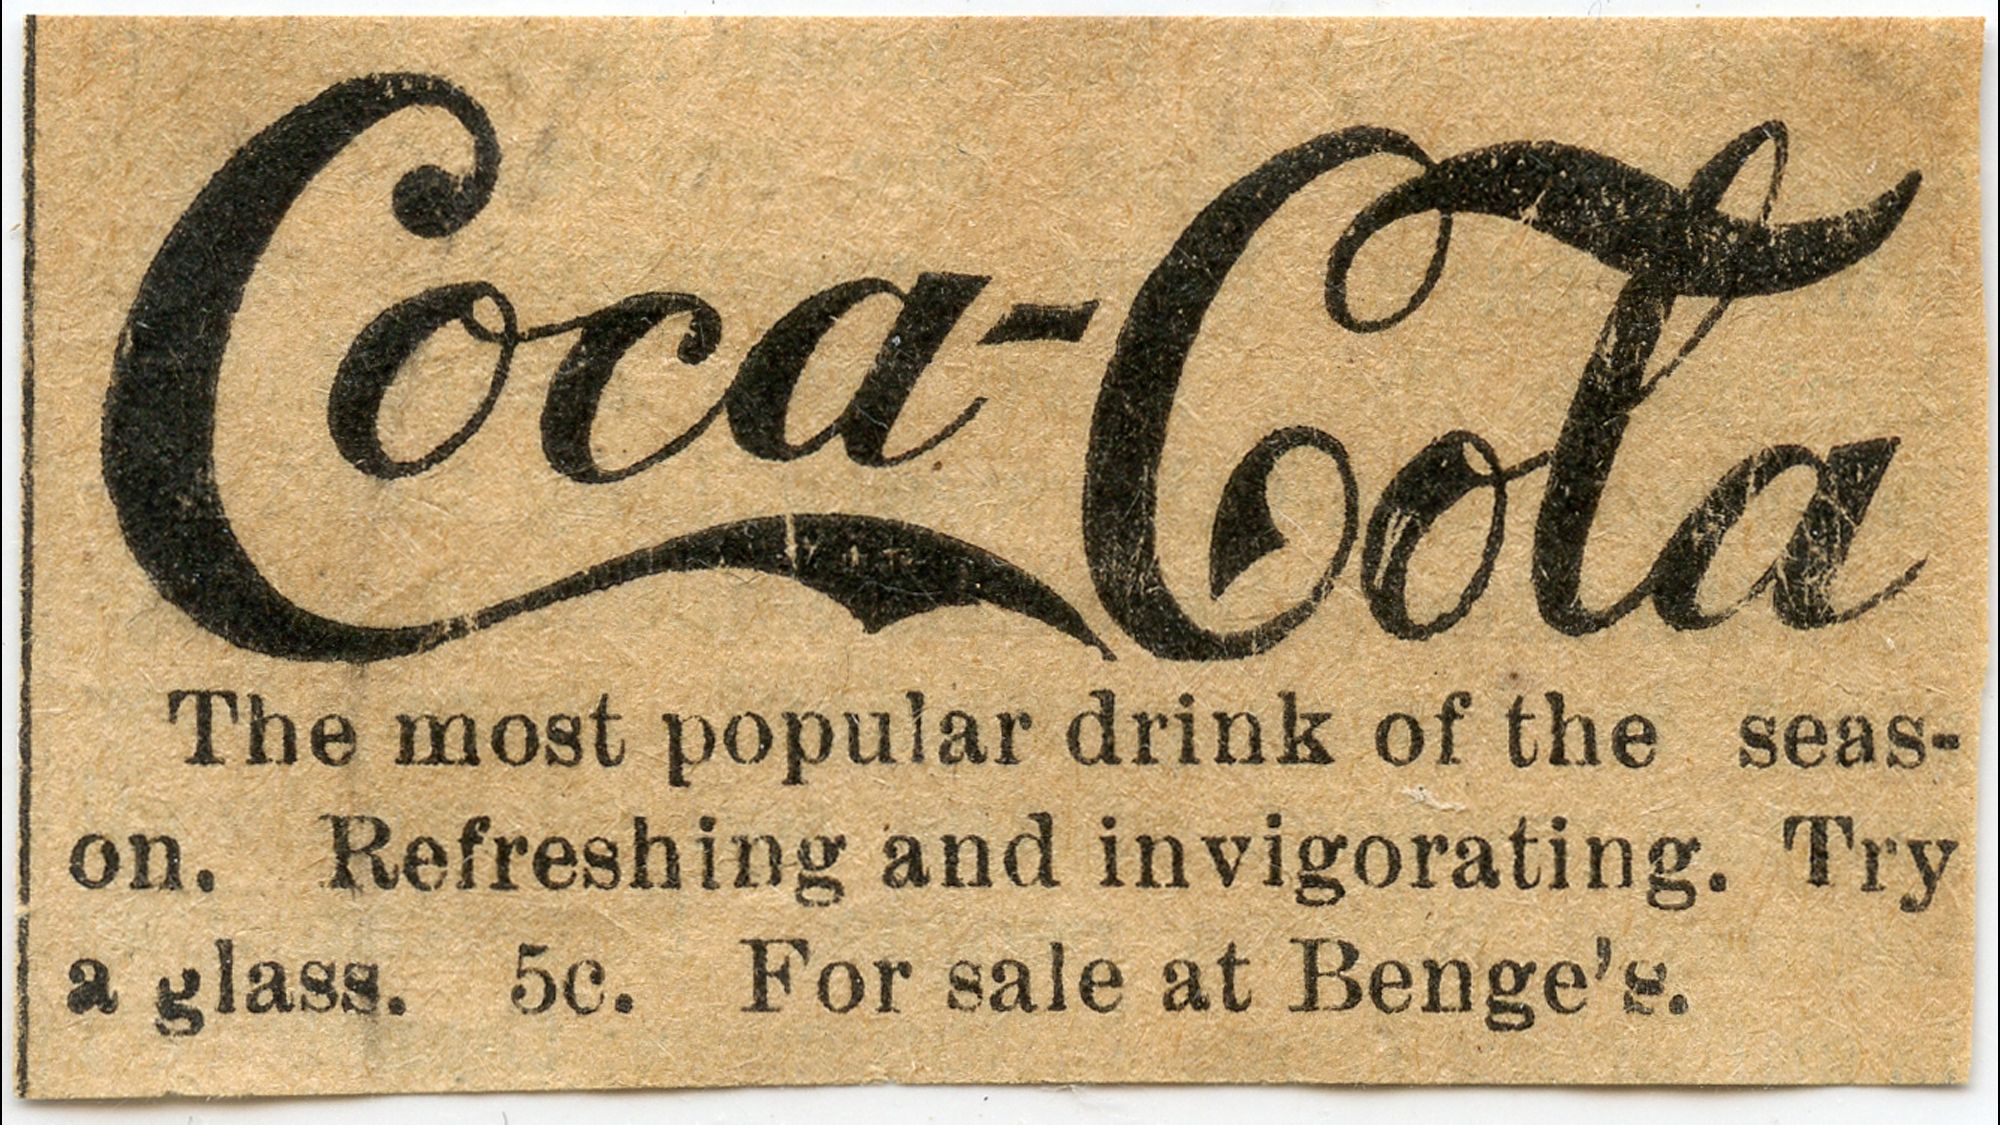 first coca cola advertisement